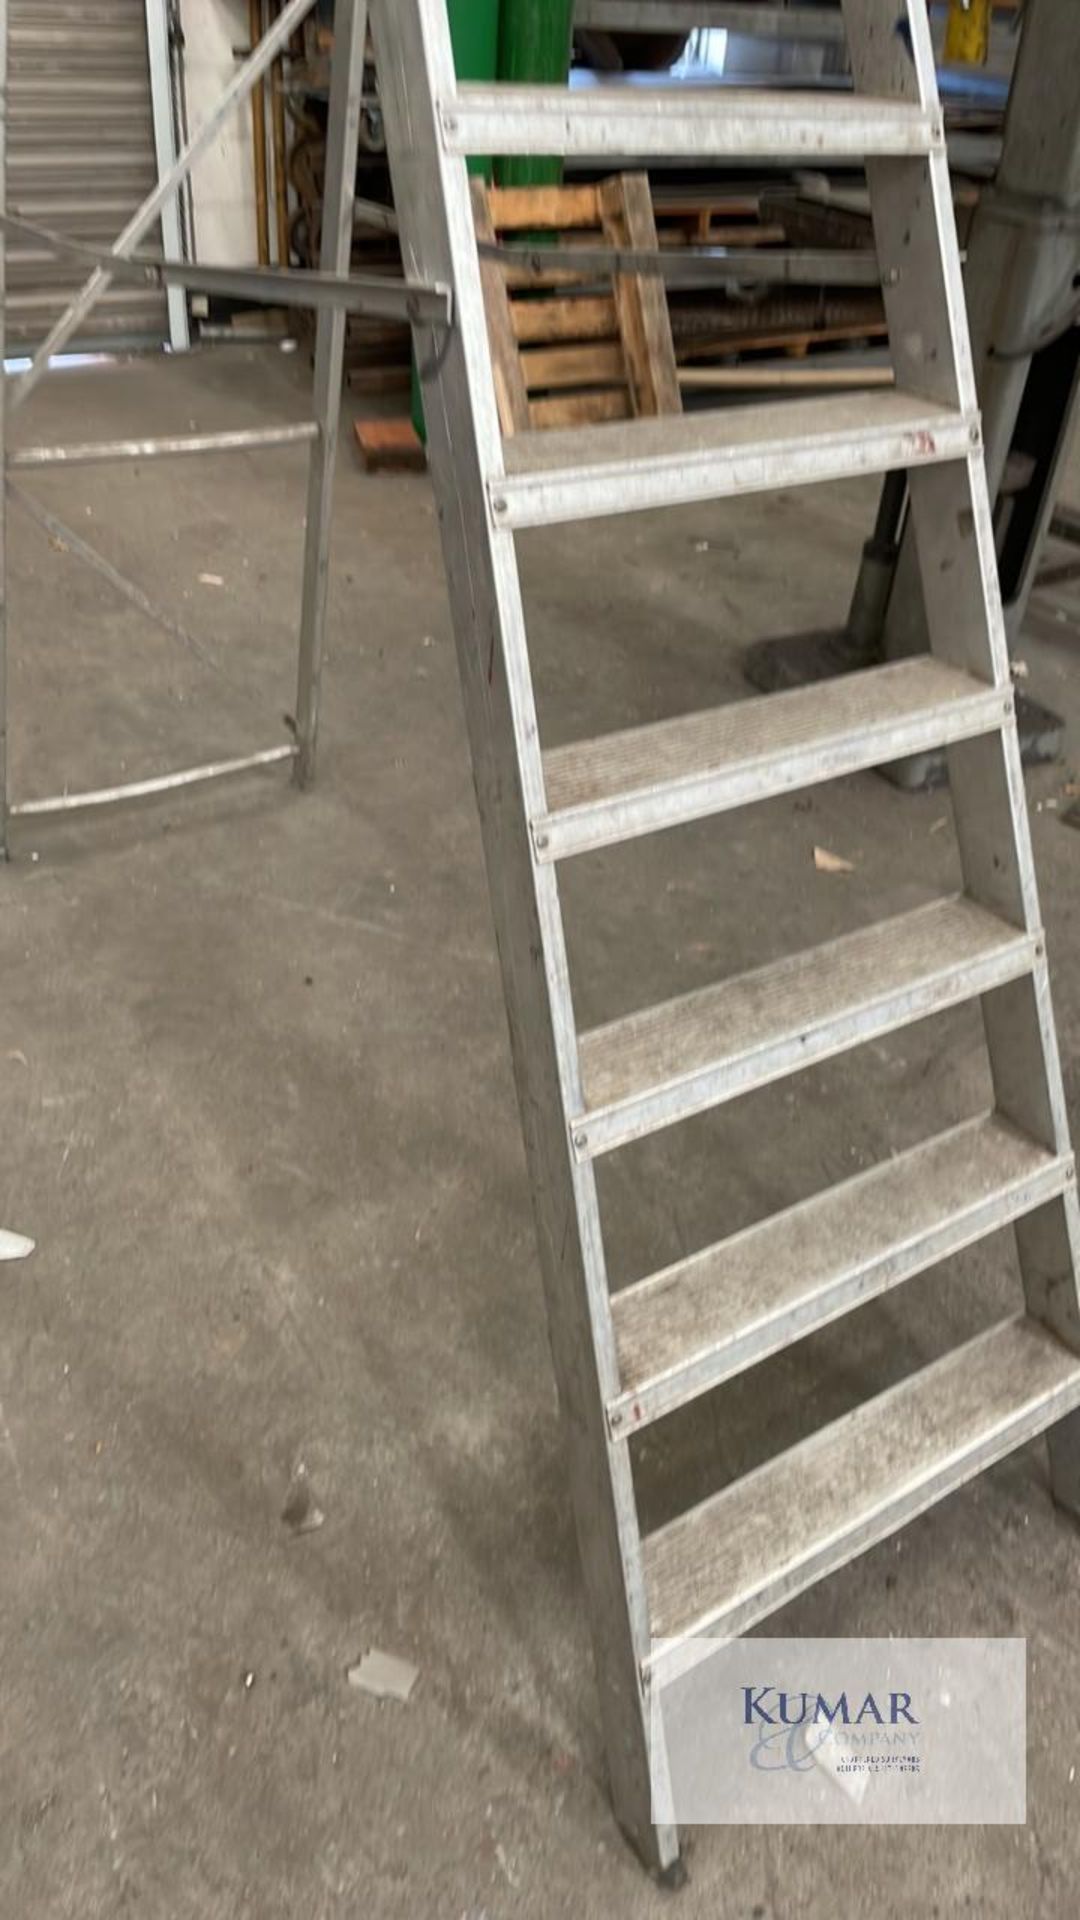 Large Aluminium Step Ladders Circa 10 foot Reach - Image 2 of 4